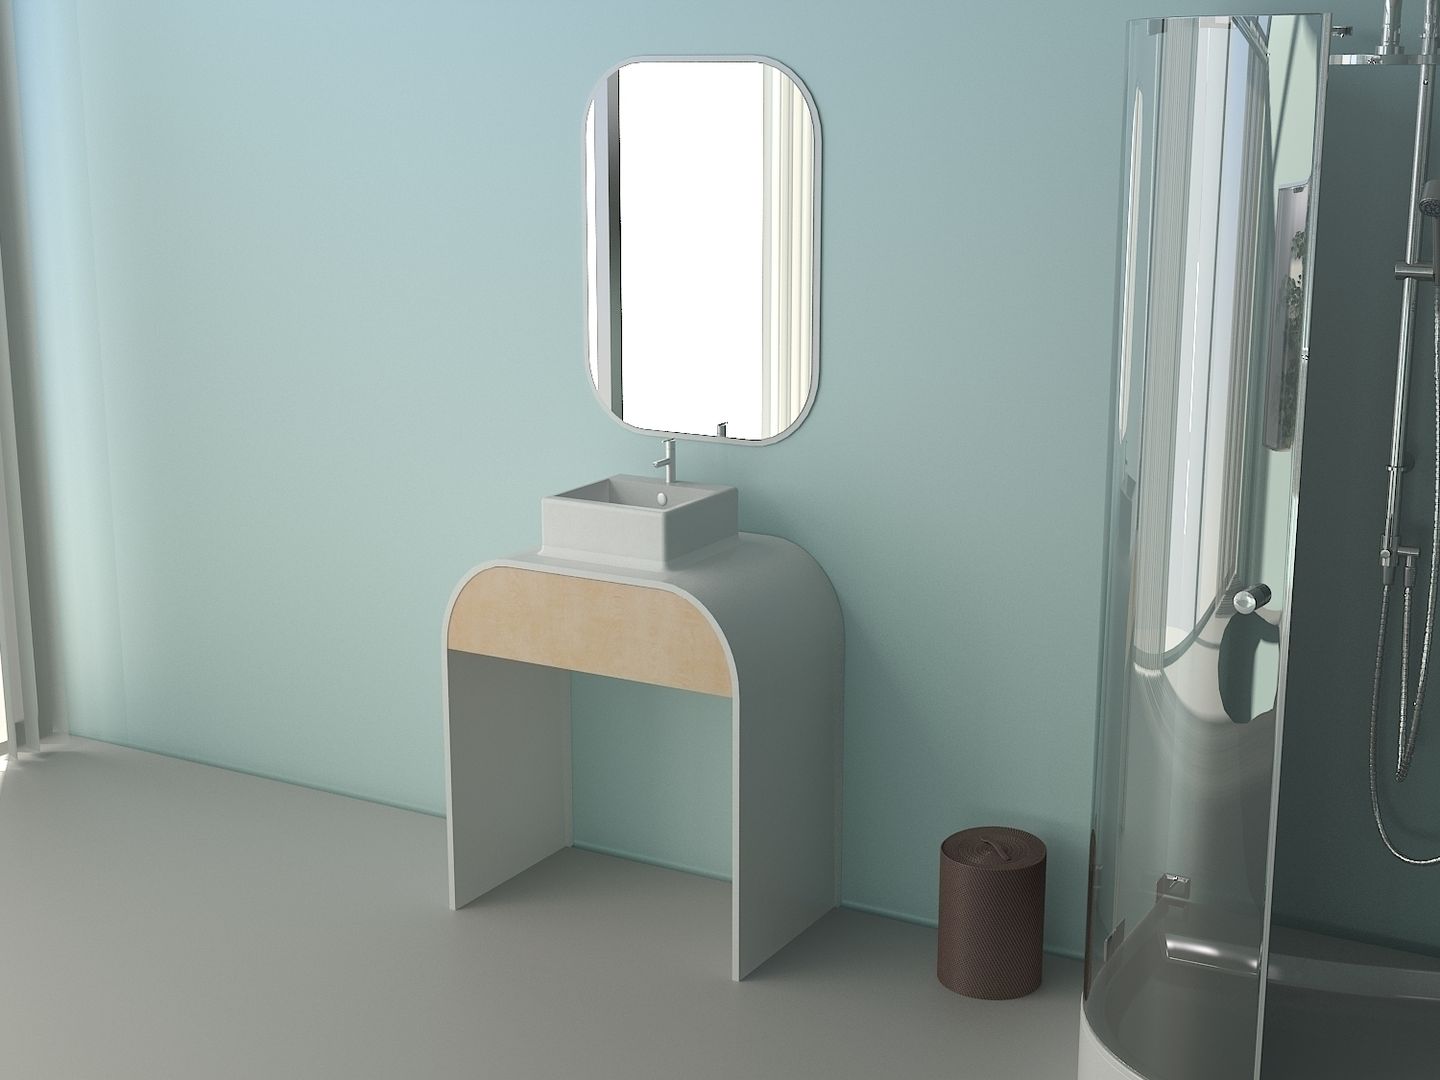 Melt Concept, Tirdad Kiamanesh Tirdad Kiamanesh Minimal style Bathroom Medicine cabinets